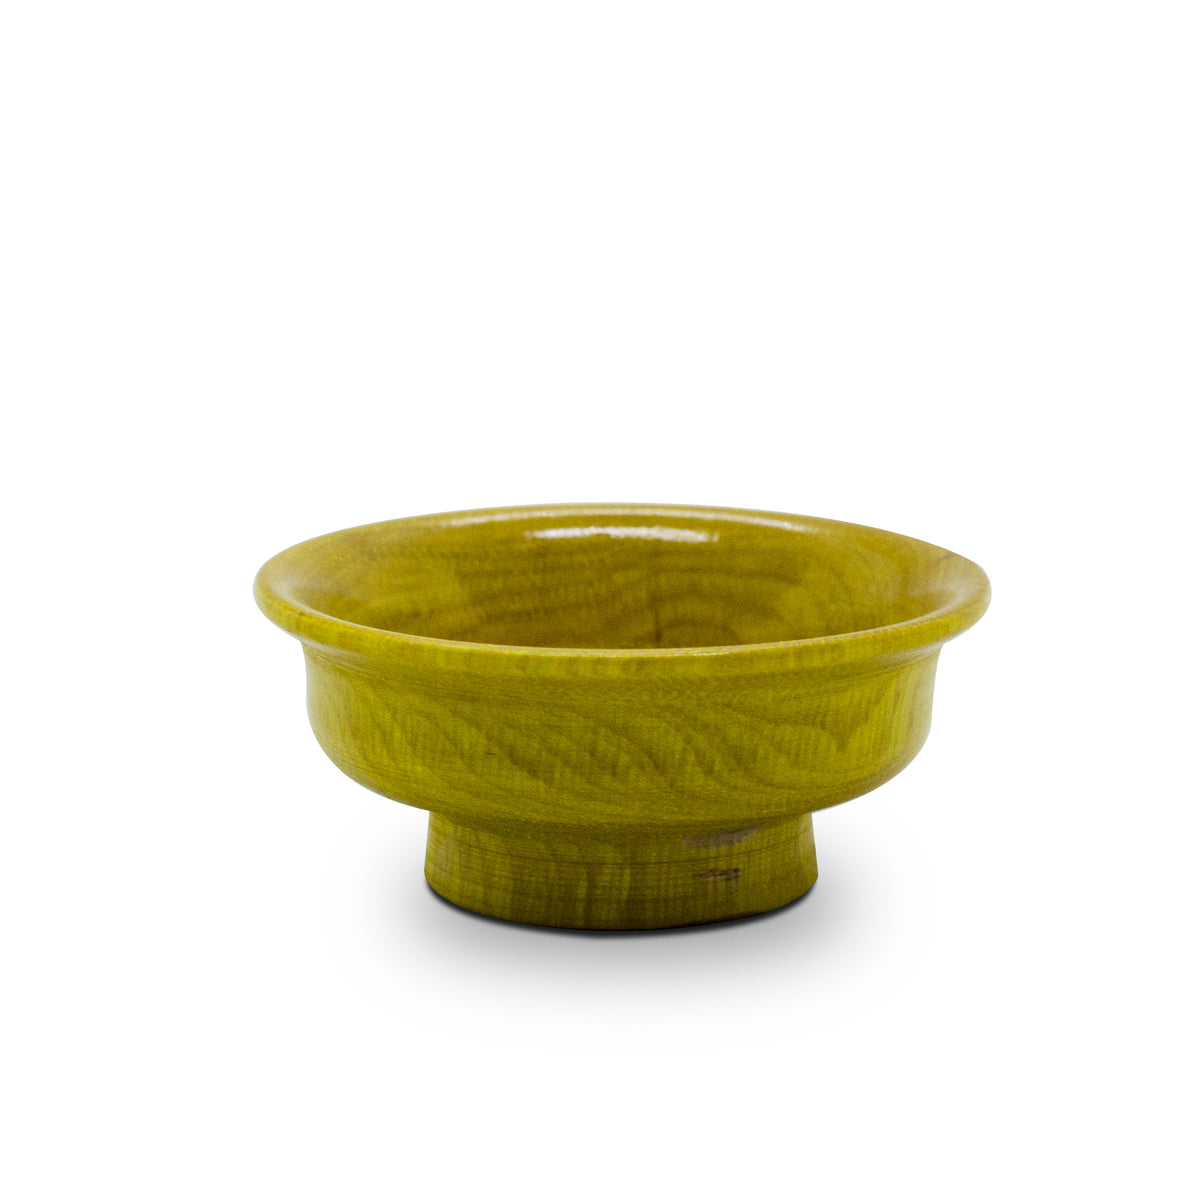 Bhutanese Wooden Cup - Phob - Buy Online - Made in Bhutan